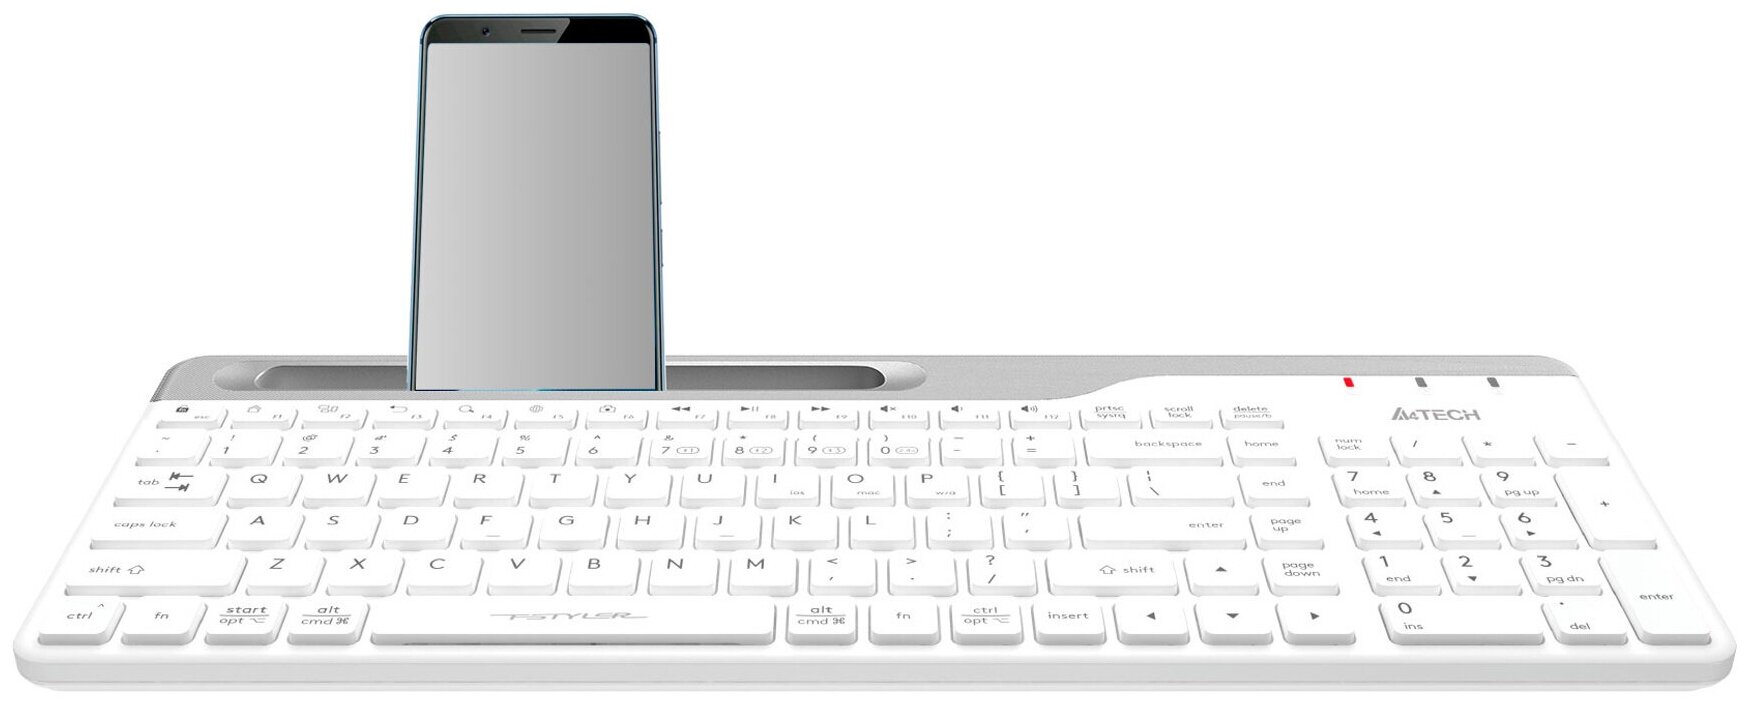 Клавиатура A4TECH Fstyler FBK25, USB, Bluetooth/Радиоканал, белый серый [fbk25 white]